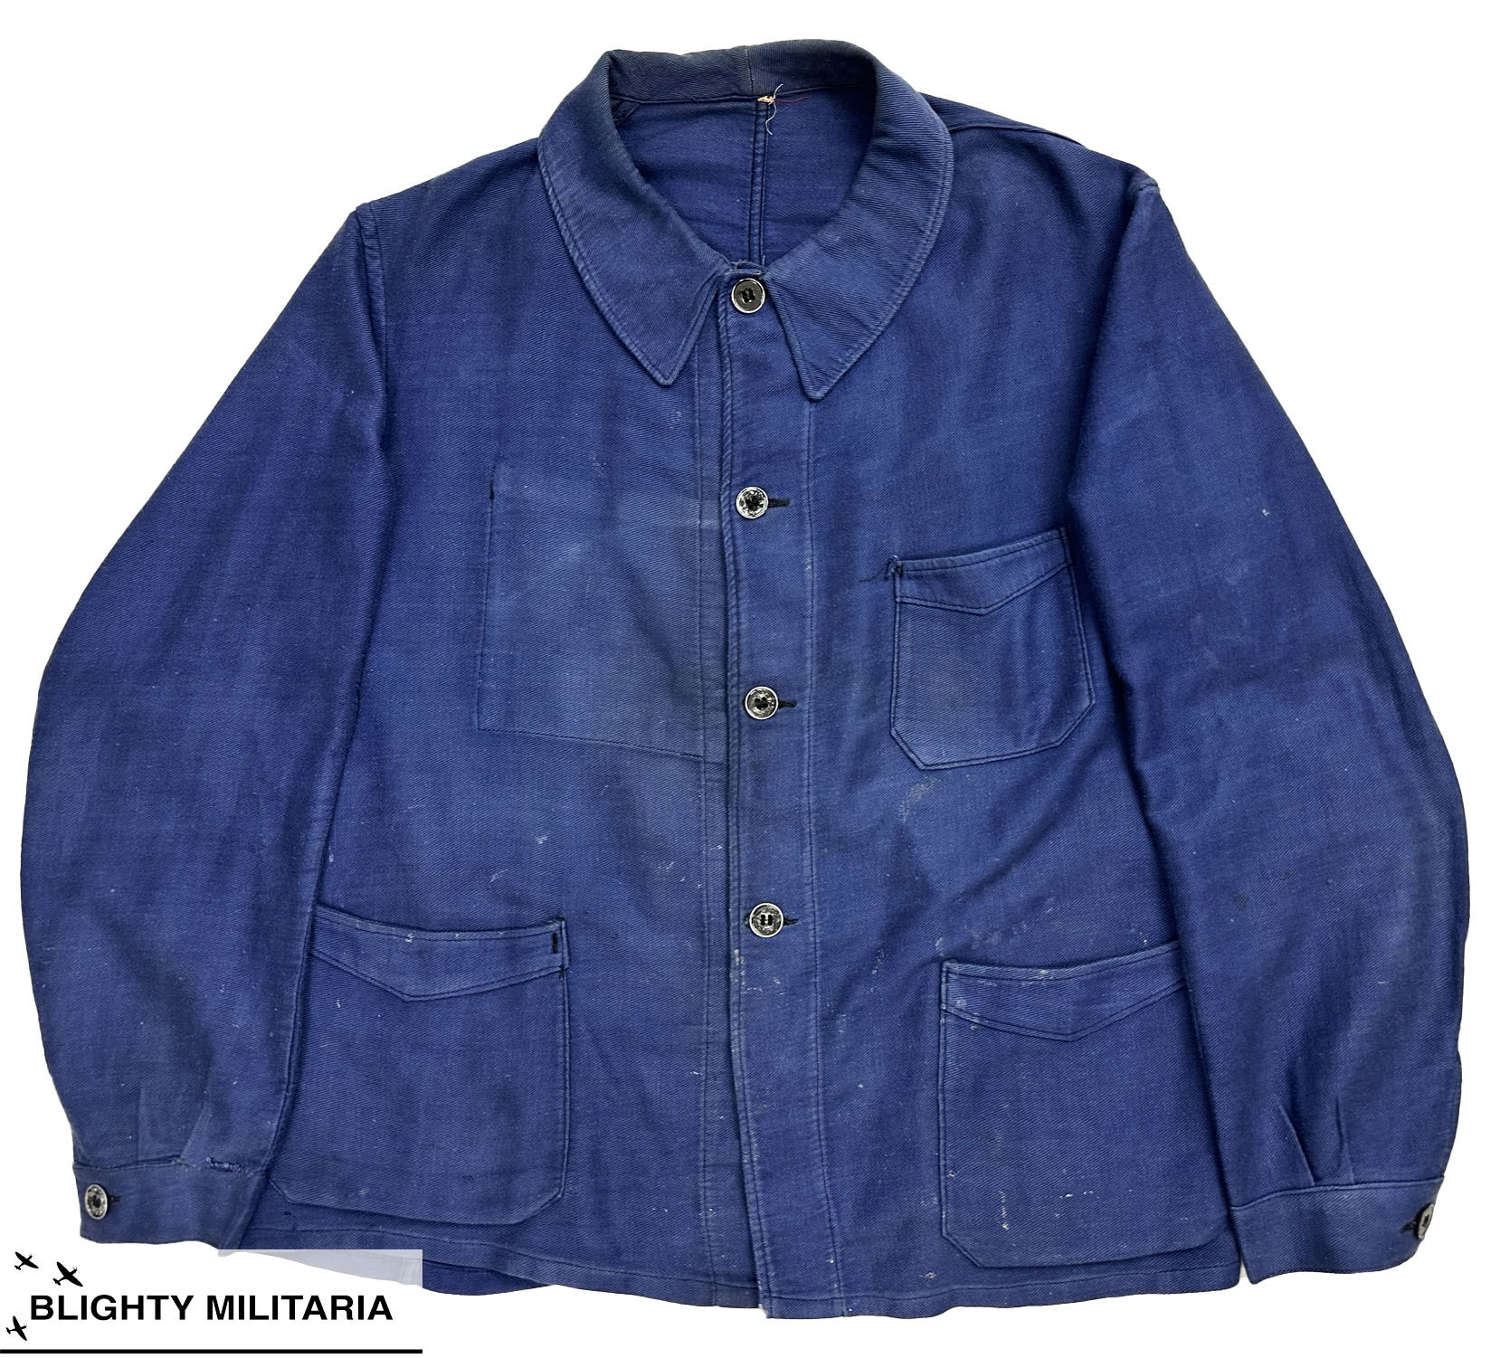 Original 1940s European Blue Workwear Chore Jacket - Size 40